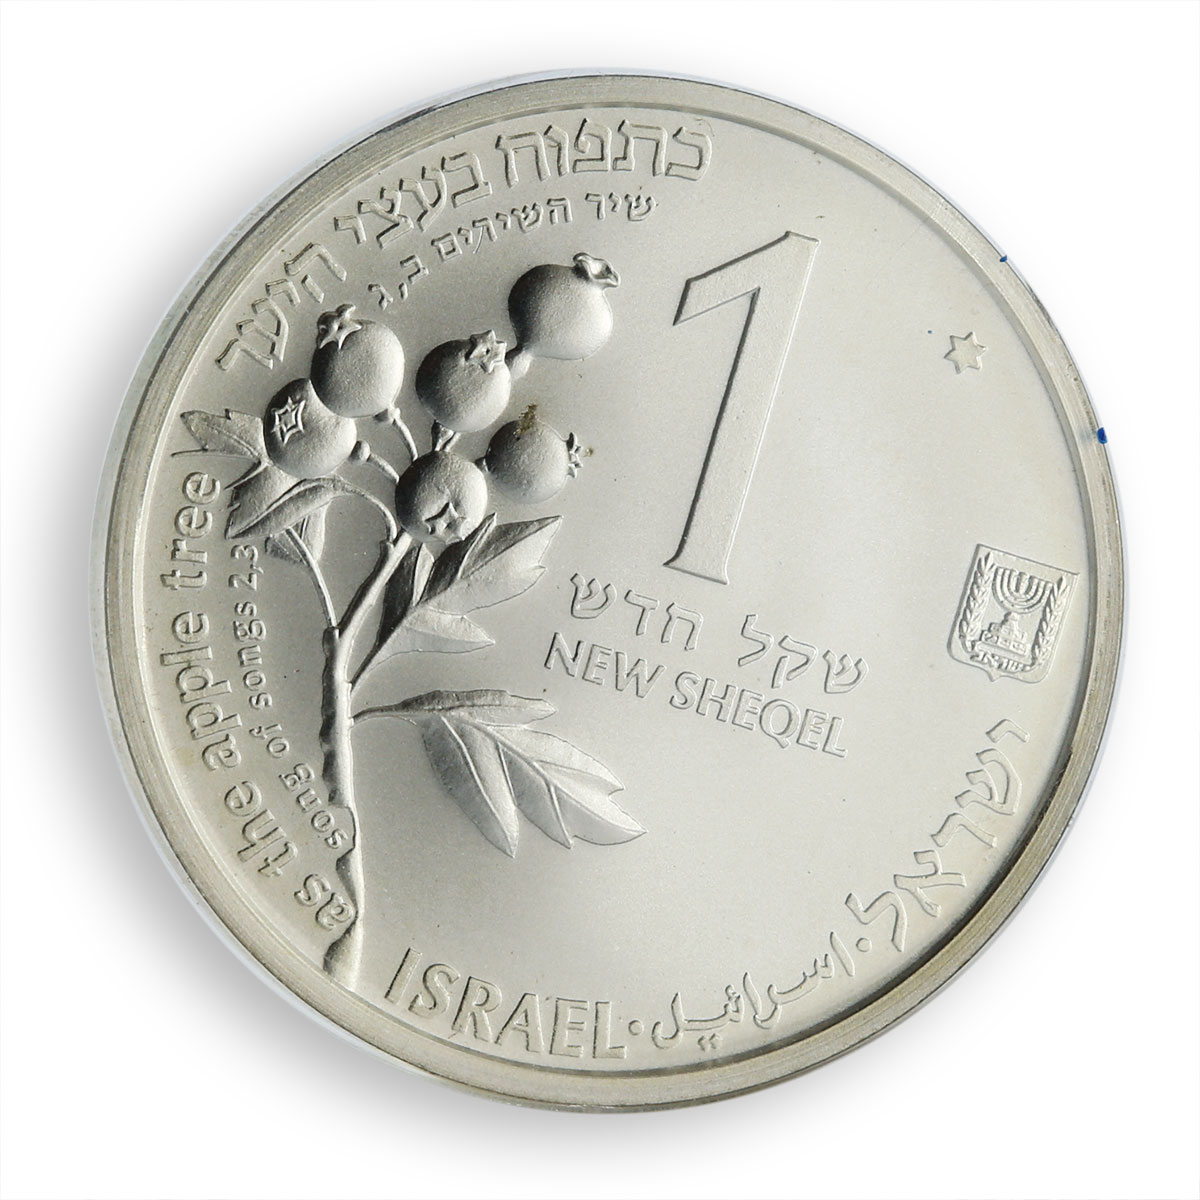 Israel 1 Sheqel wildlife-hart smooth silver coin 1993